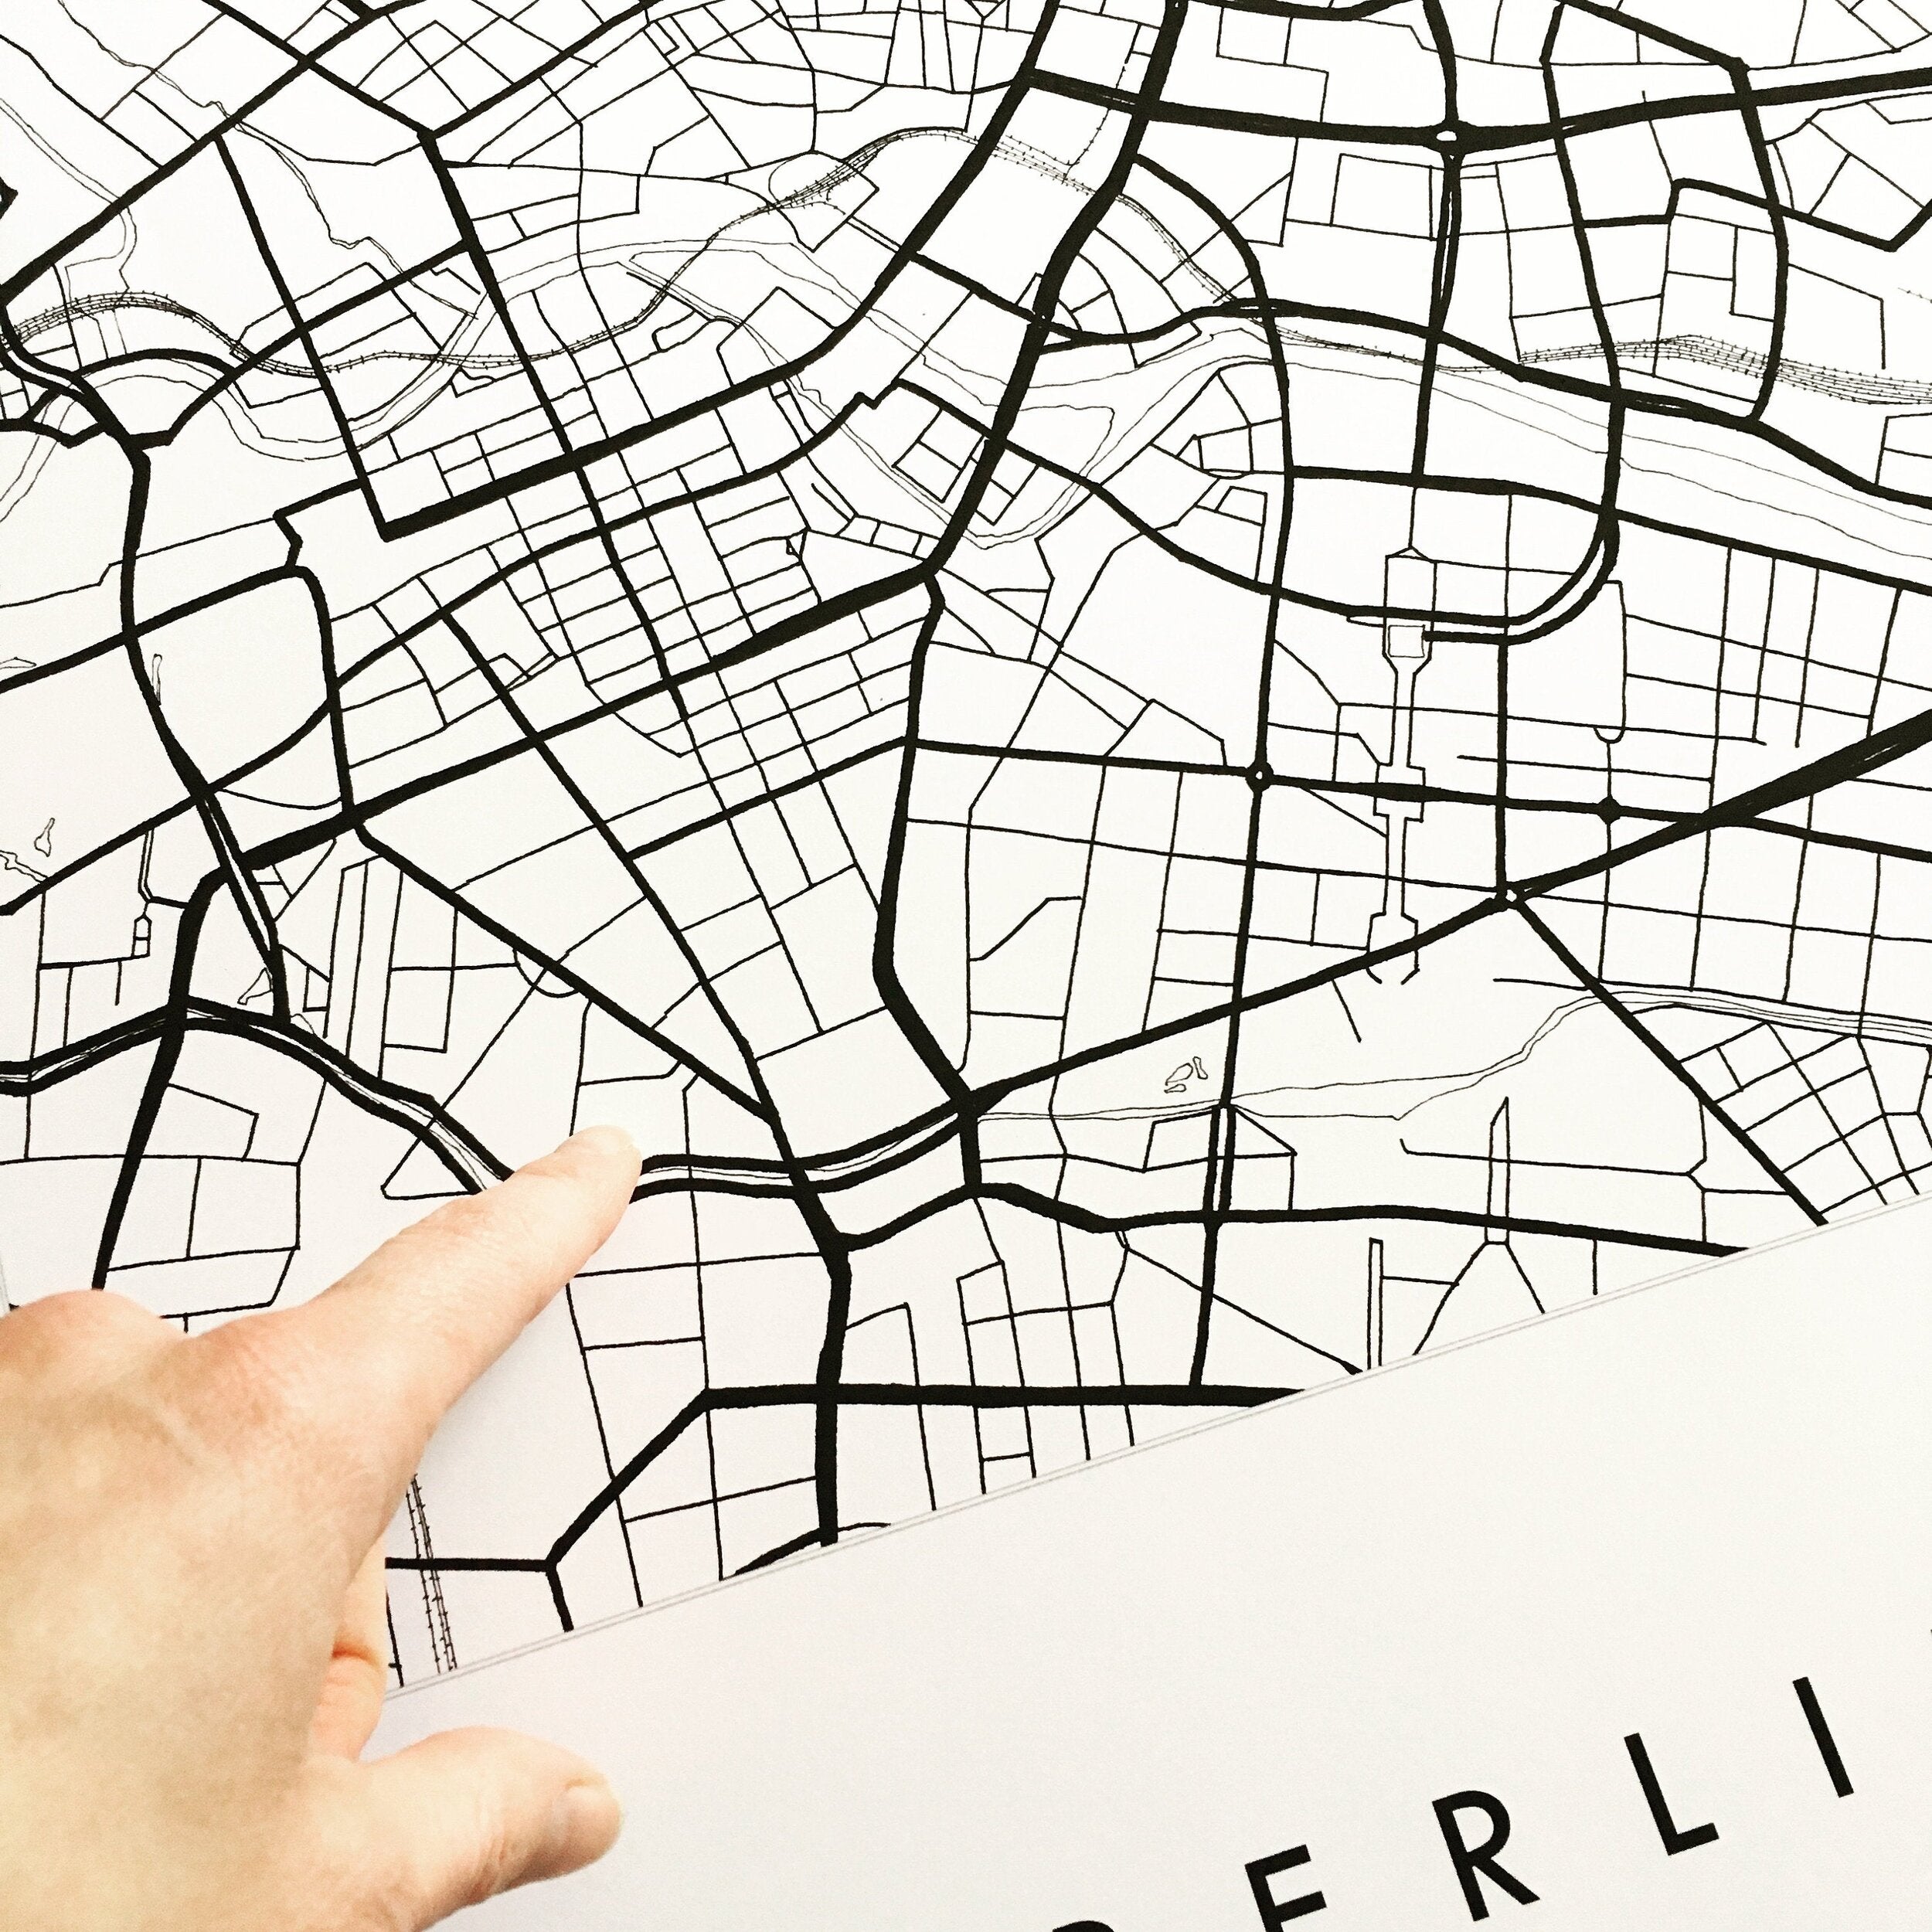 BERLIN City Lines Map: PRINT